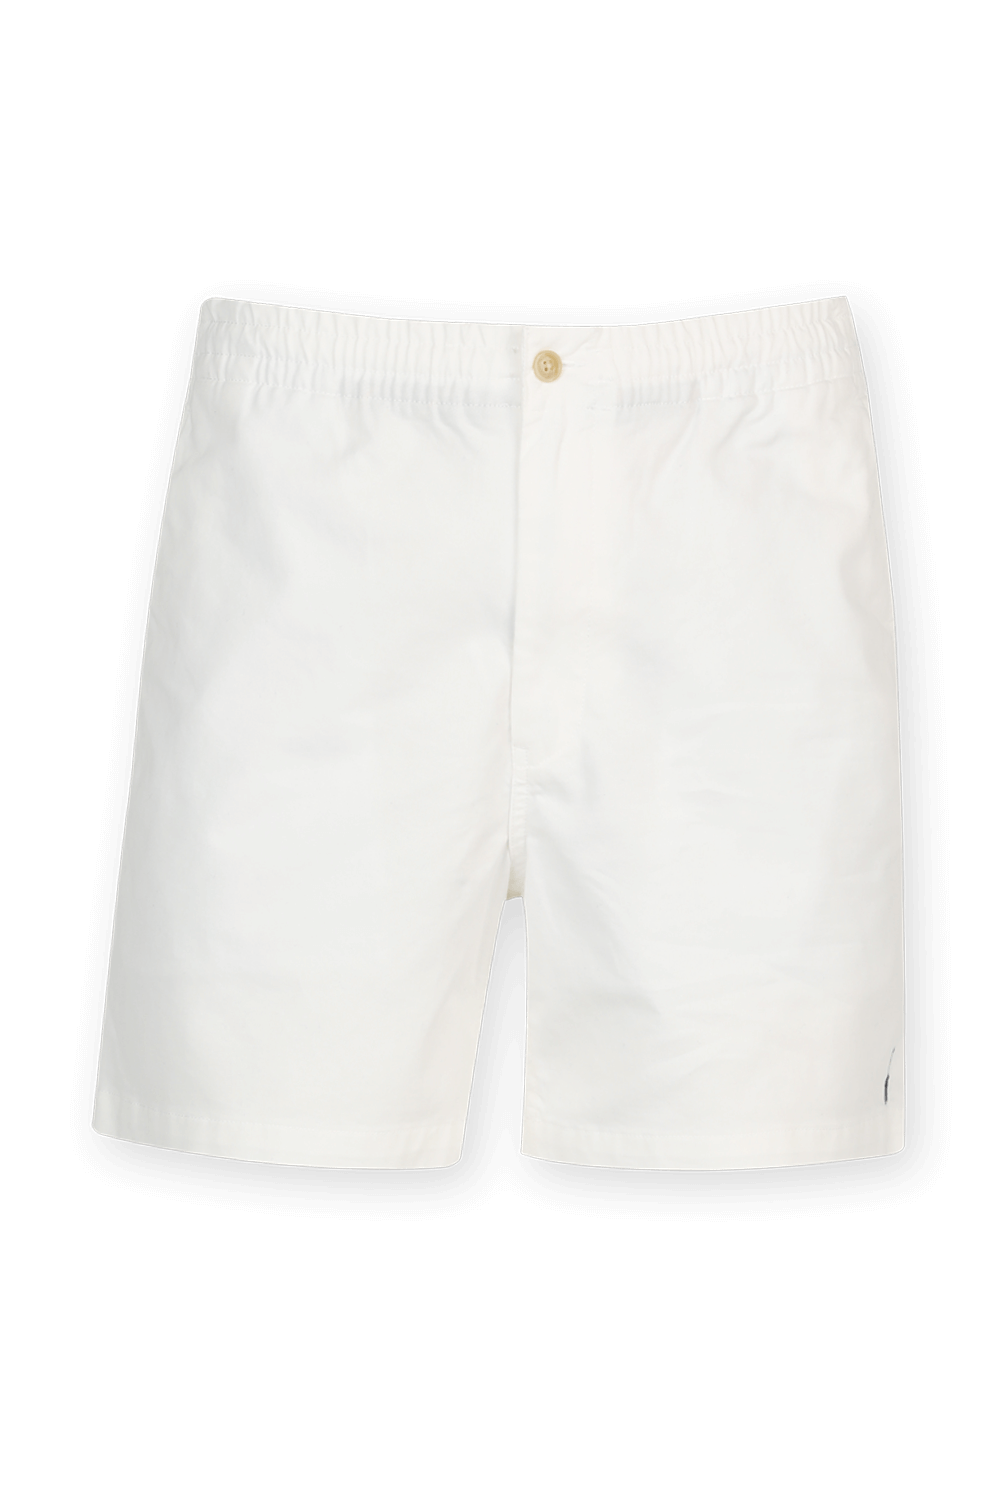 Cotton Flat Shorts in White POLO RALPH LAUREN